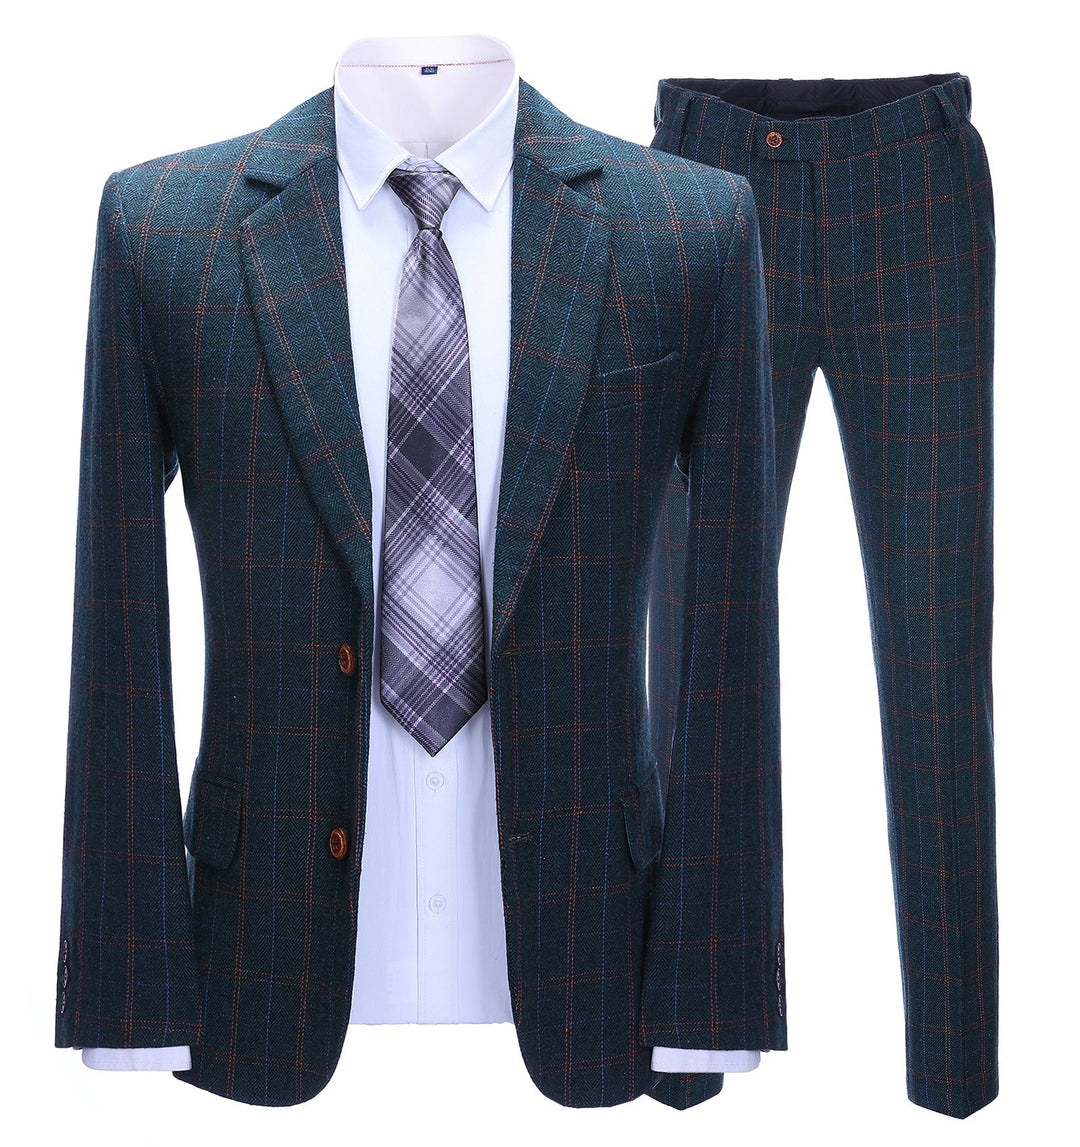 Men's Business 2 Pieces Formal Tweed Navy Plaid Notch Lapel Tuxedos for Wedding (Blazer+Pants) mens event wear